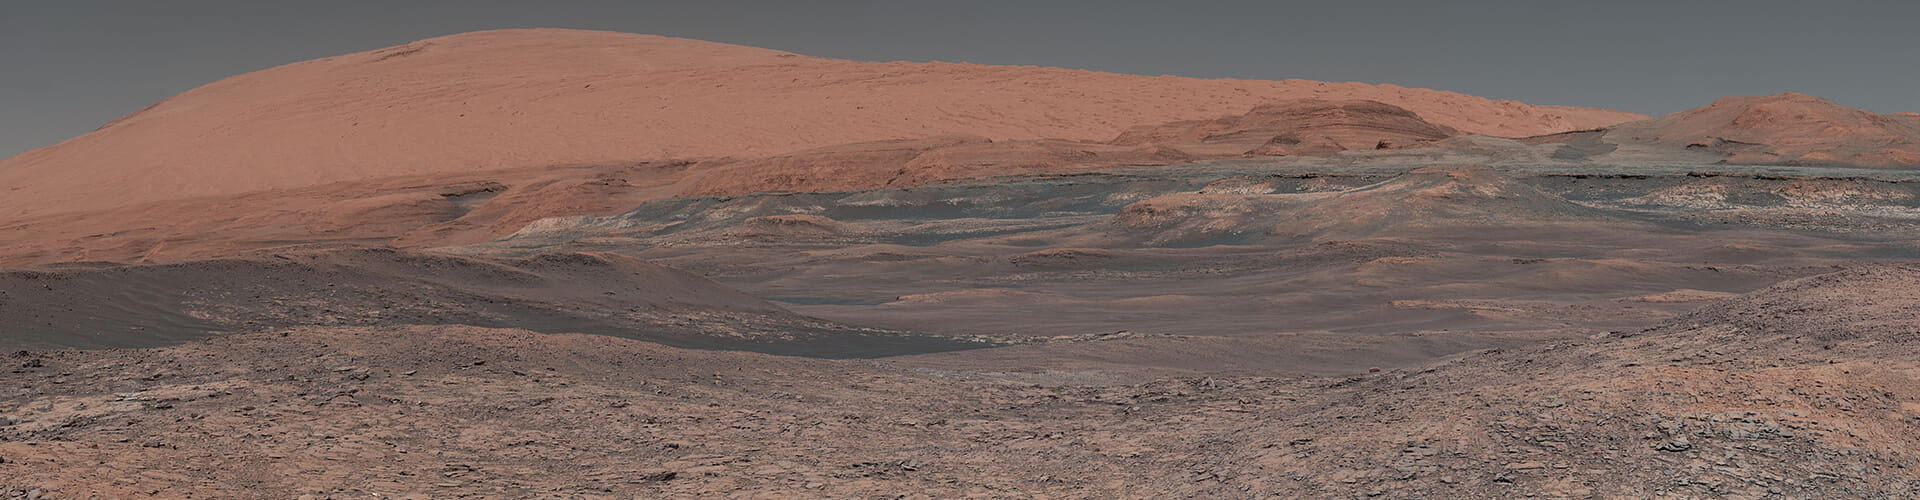 Martian landscape of soil and rocks. 